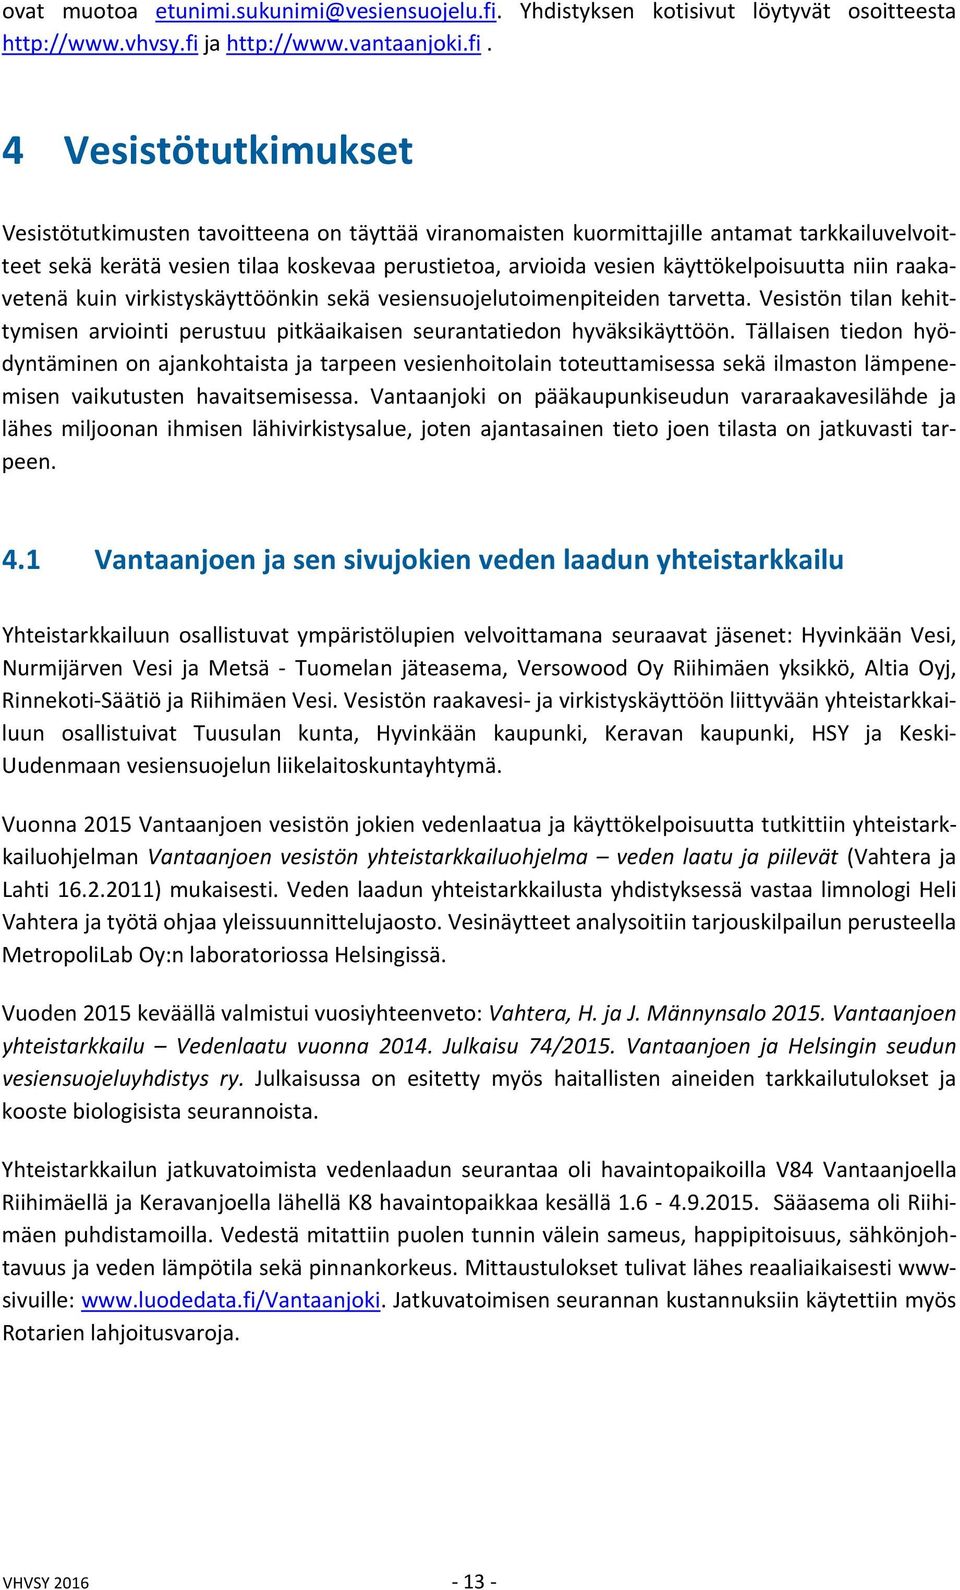 ja http://www.vantaanjoki.fi.